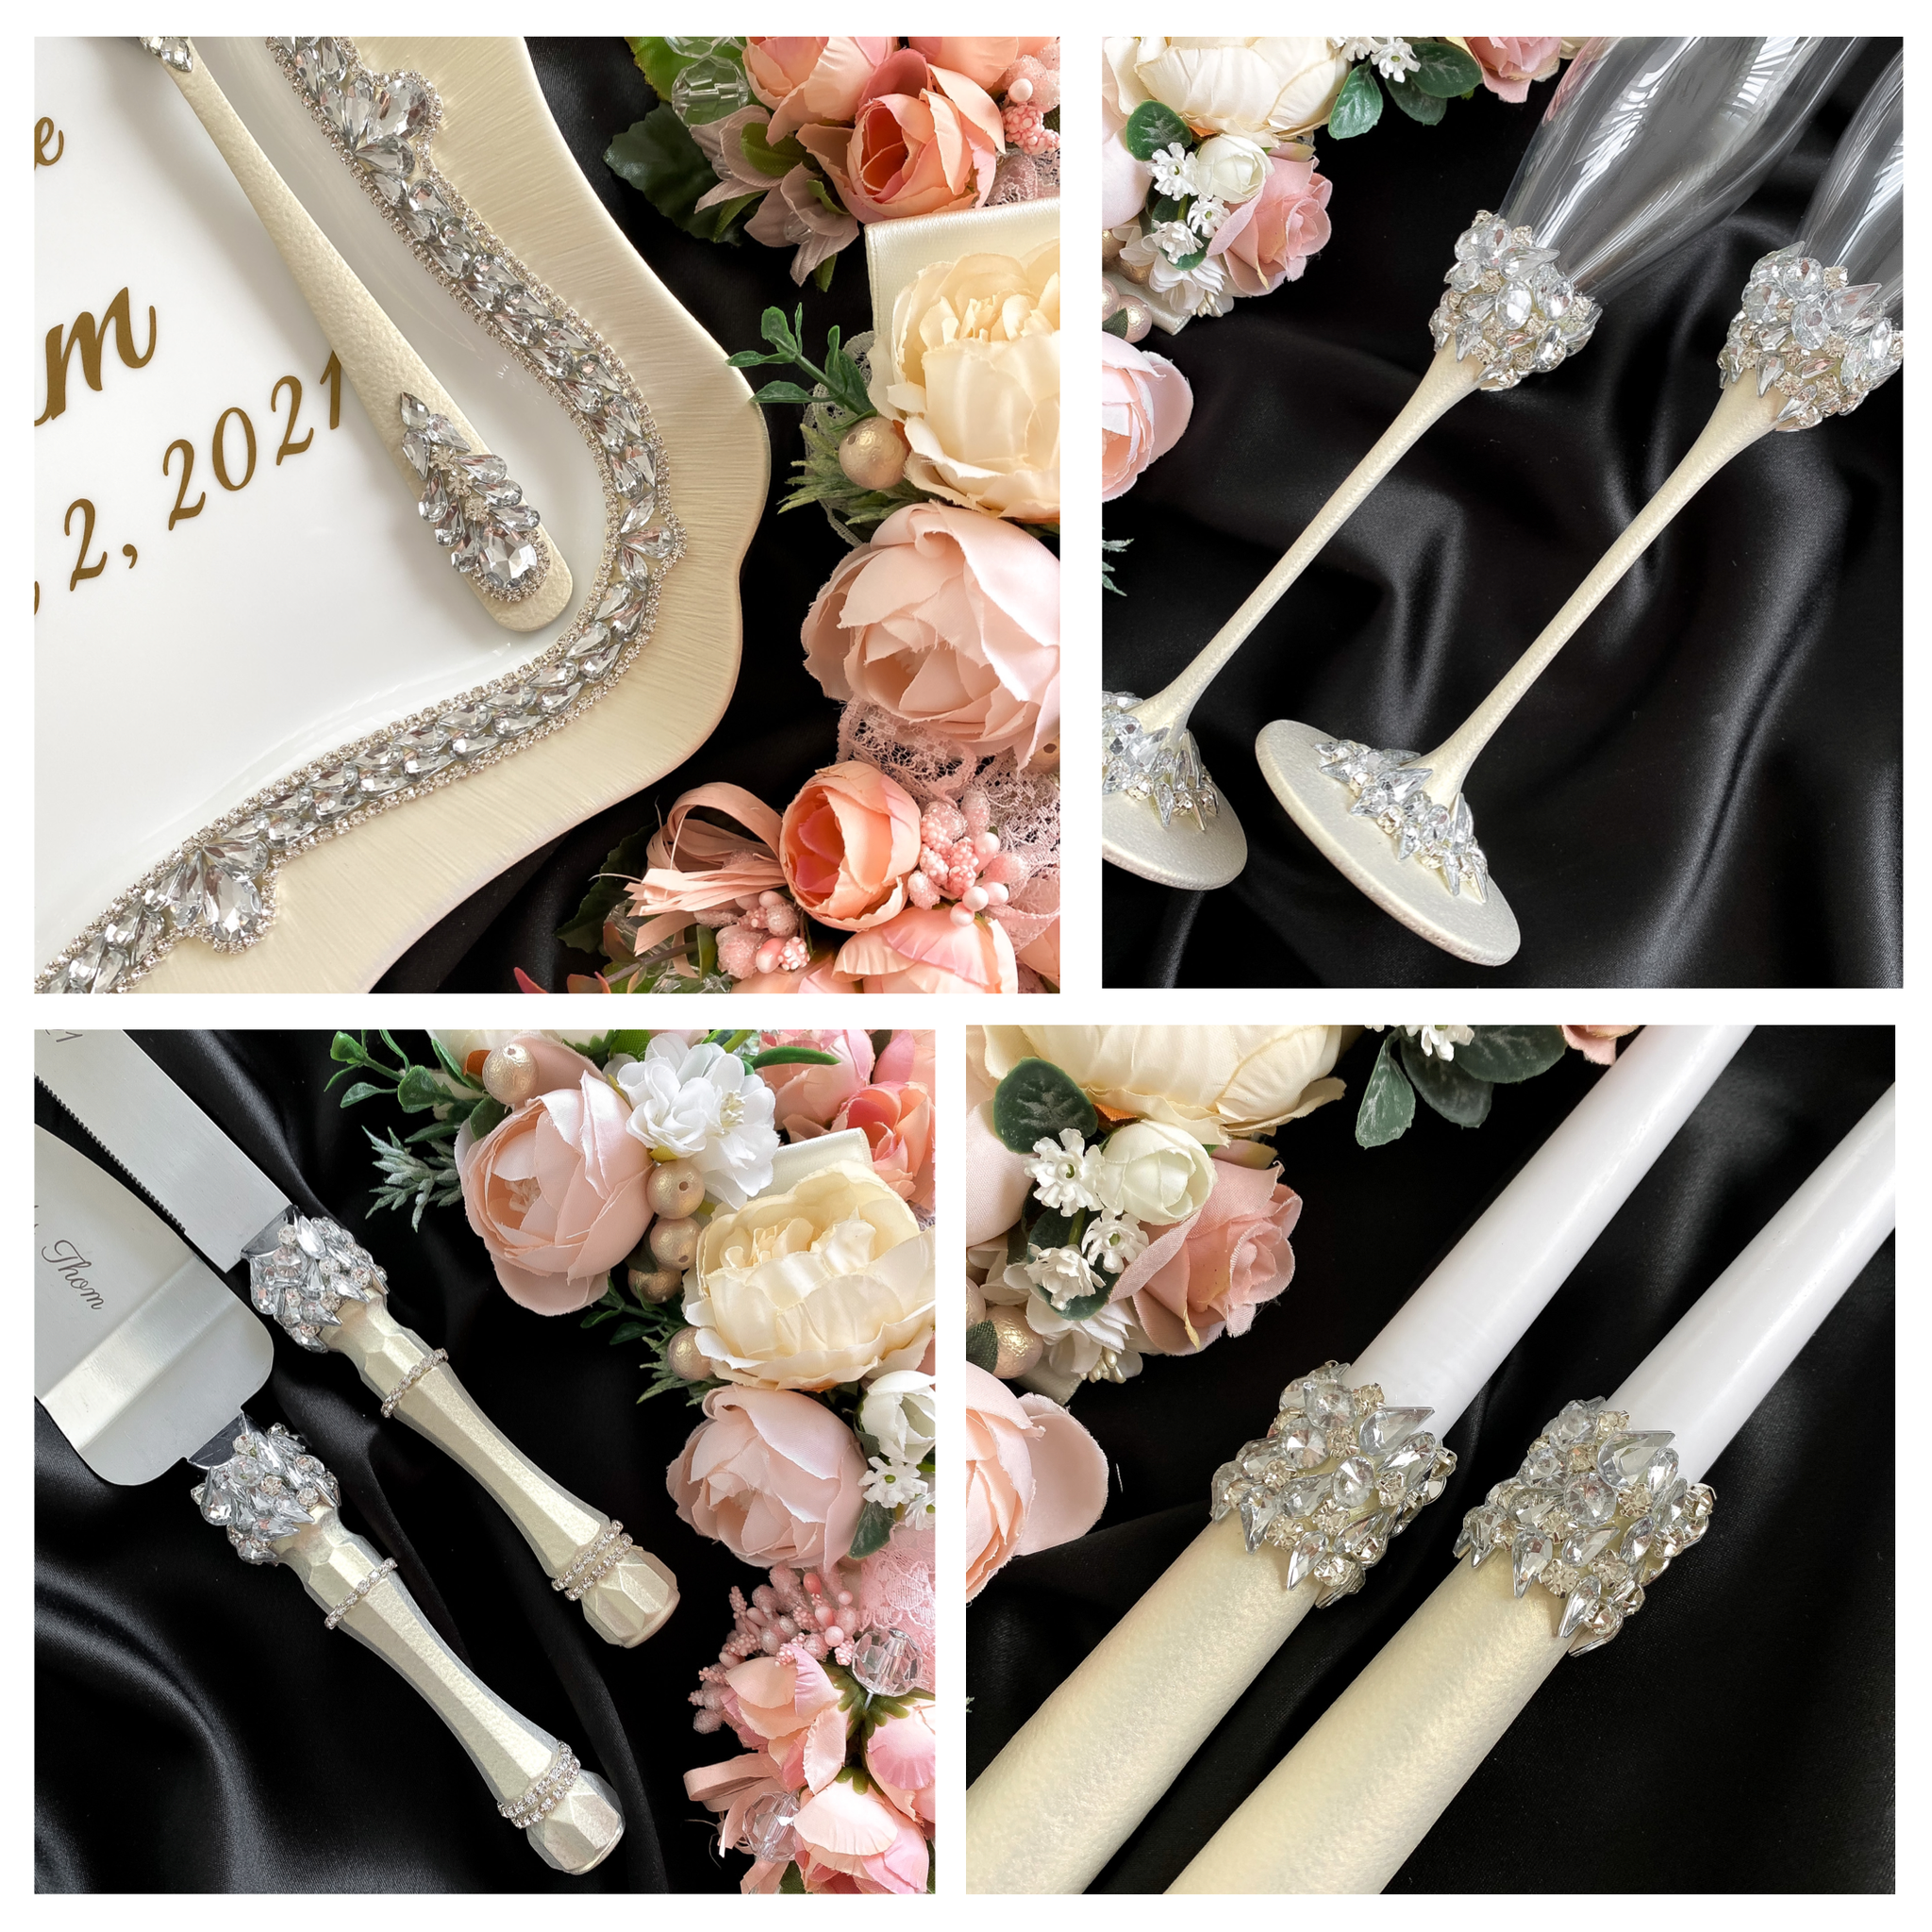 Star-wars-wedding-cake-forks-server-set-grand  Elegance-flowers-gift-bride-custom-stamped-groom-accessories-personalized-i-love-you-i-know  